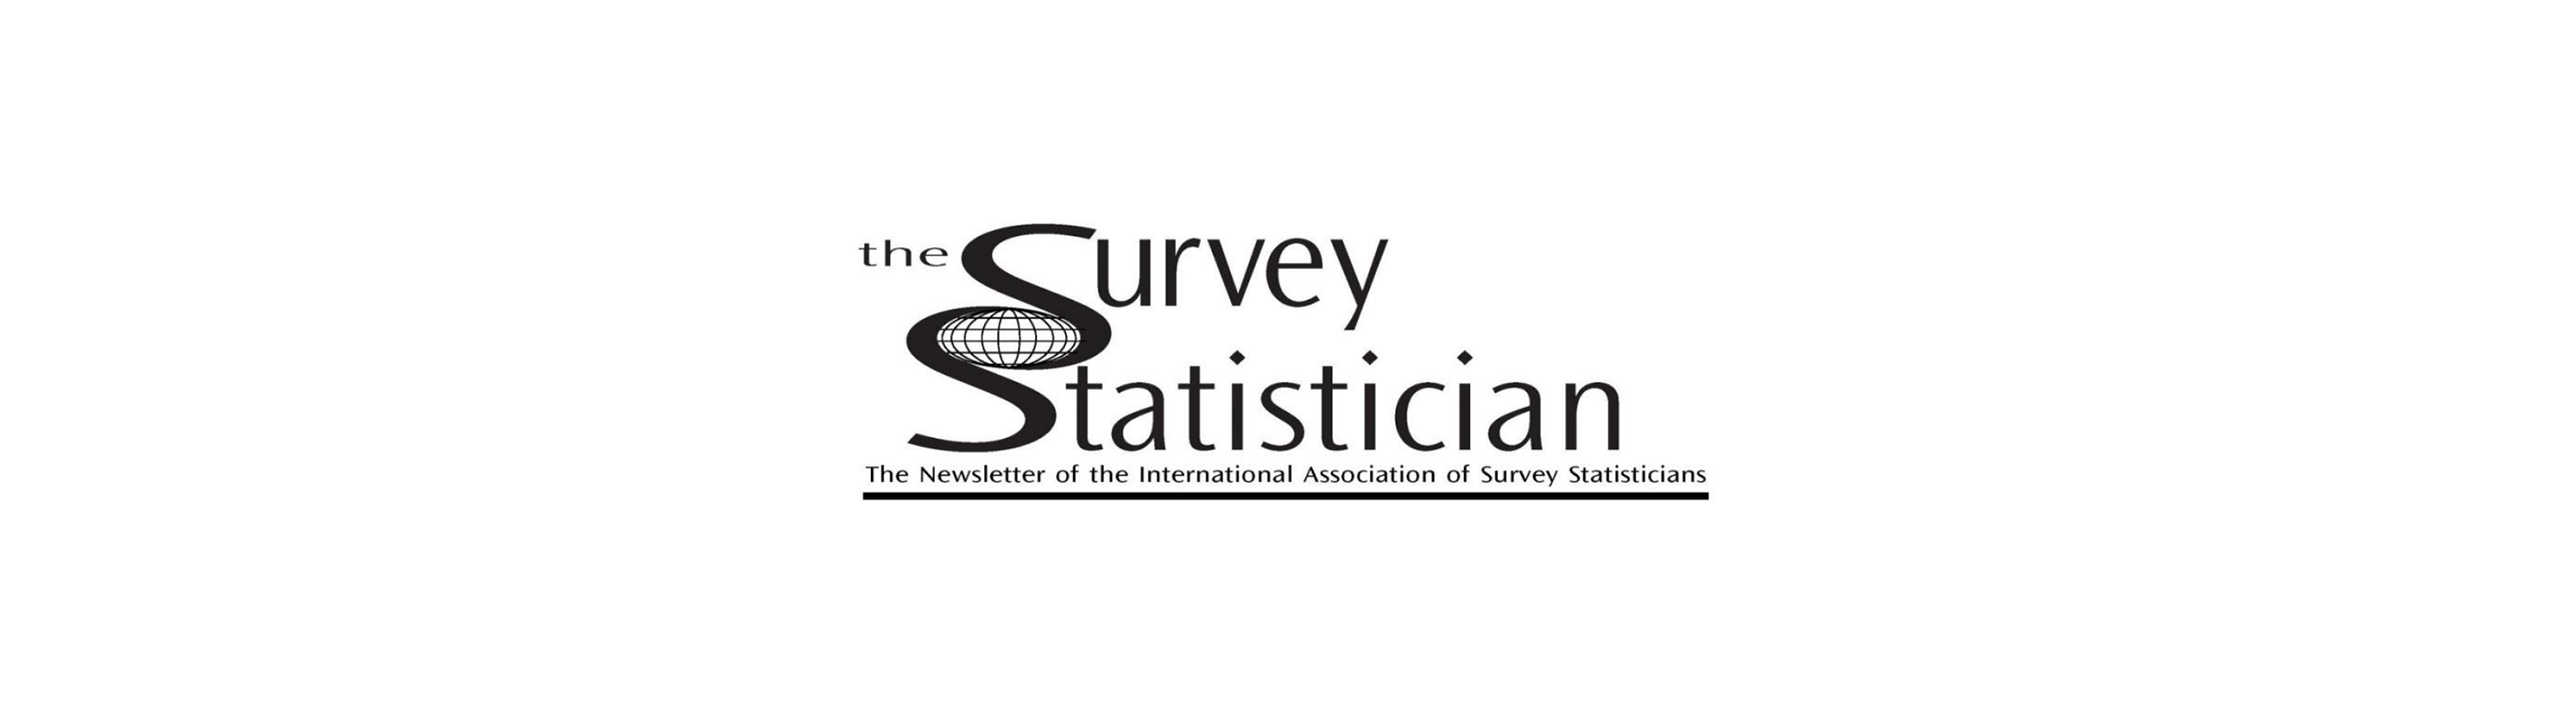 survey-statistician